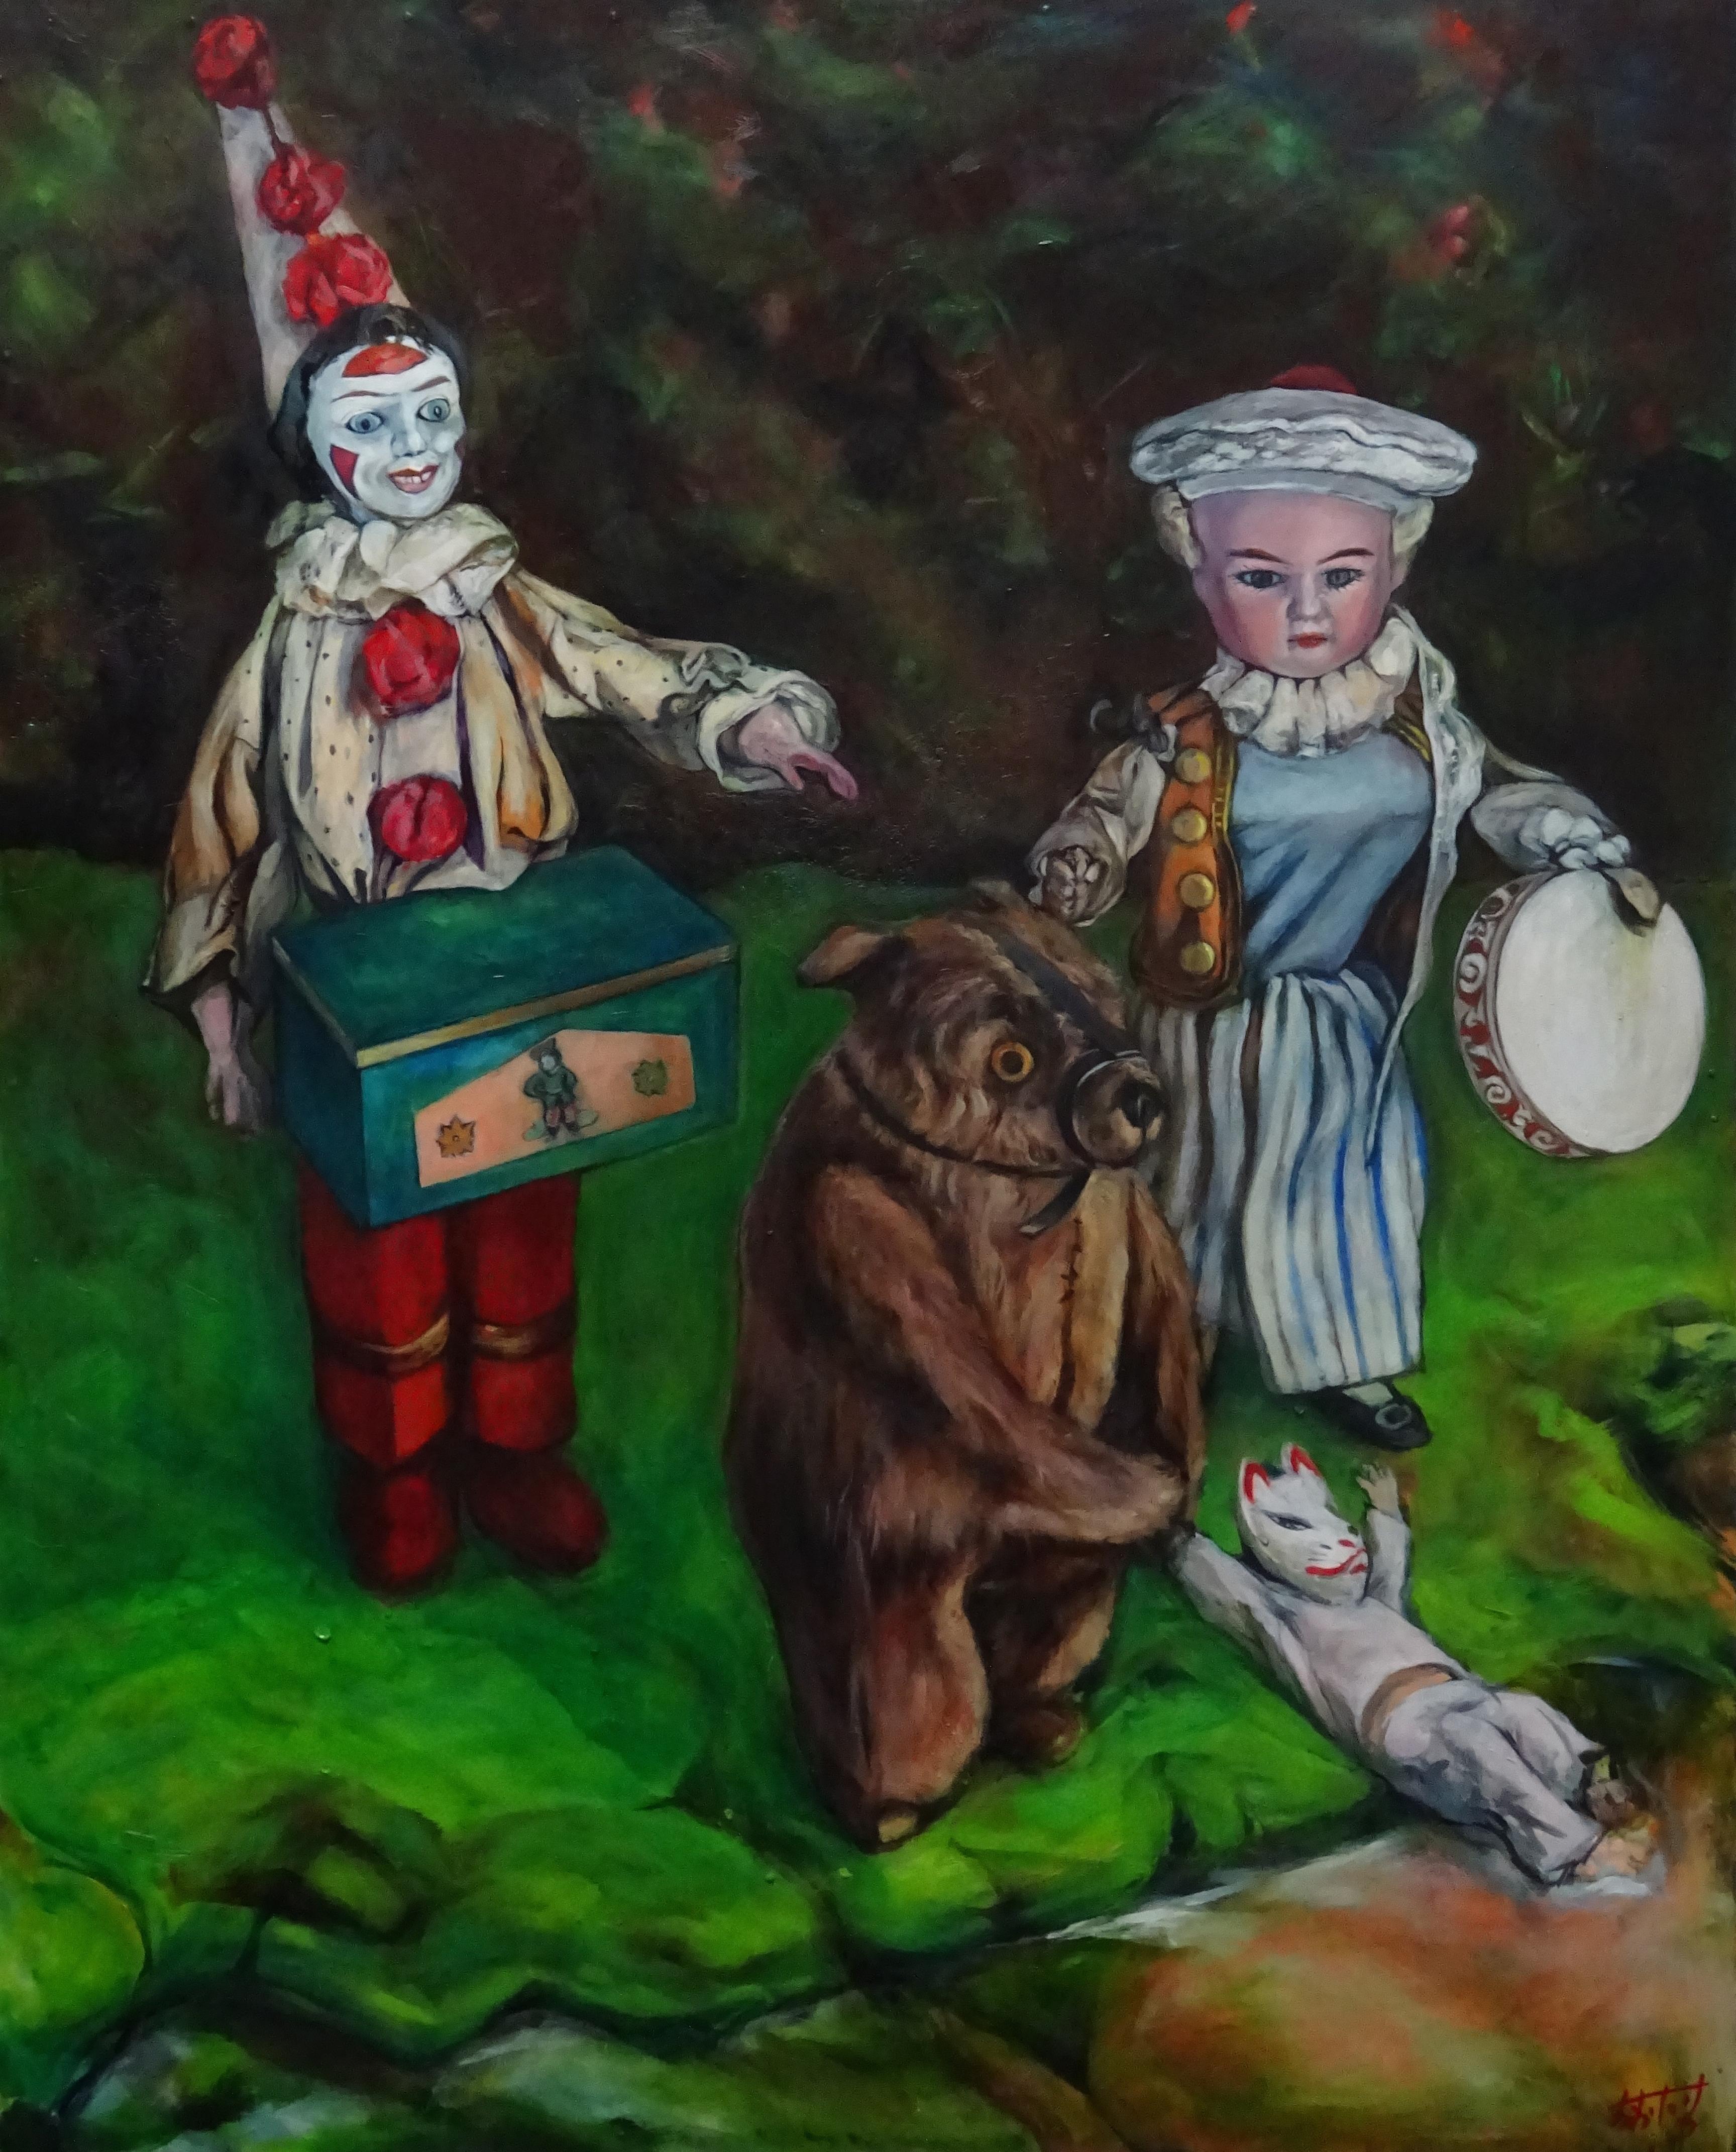 Bear keeper - Surrealism Symbolism Dream unconscious experience painting - Painting by Uki Otake